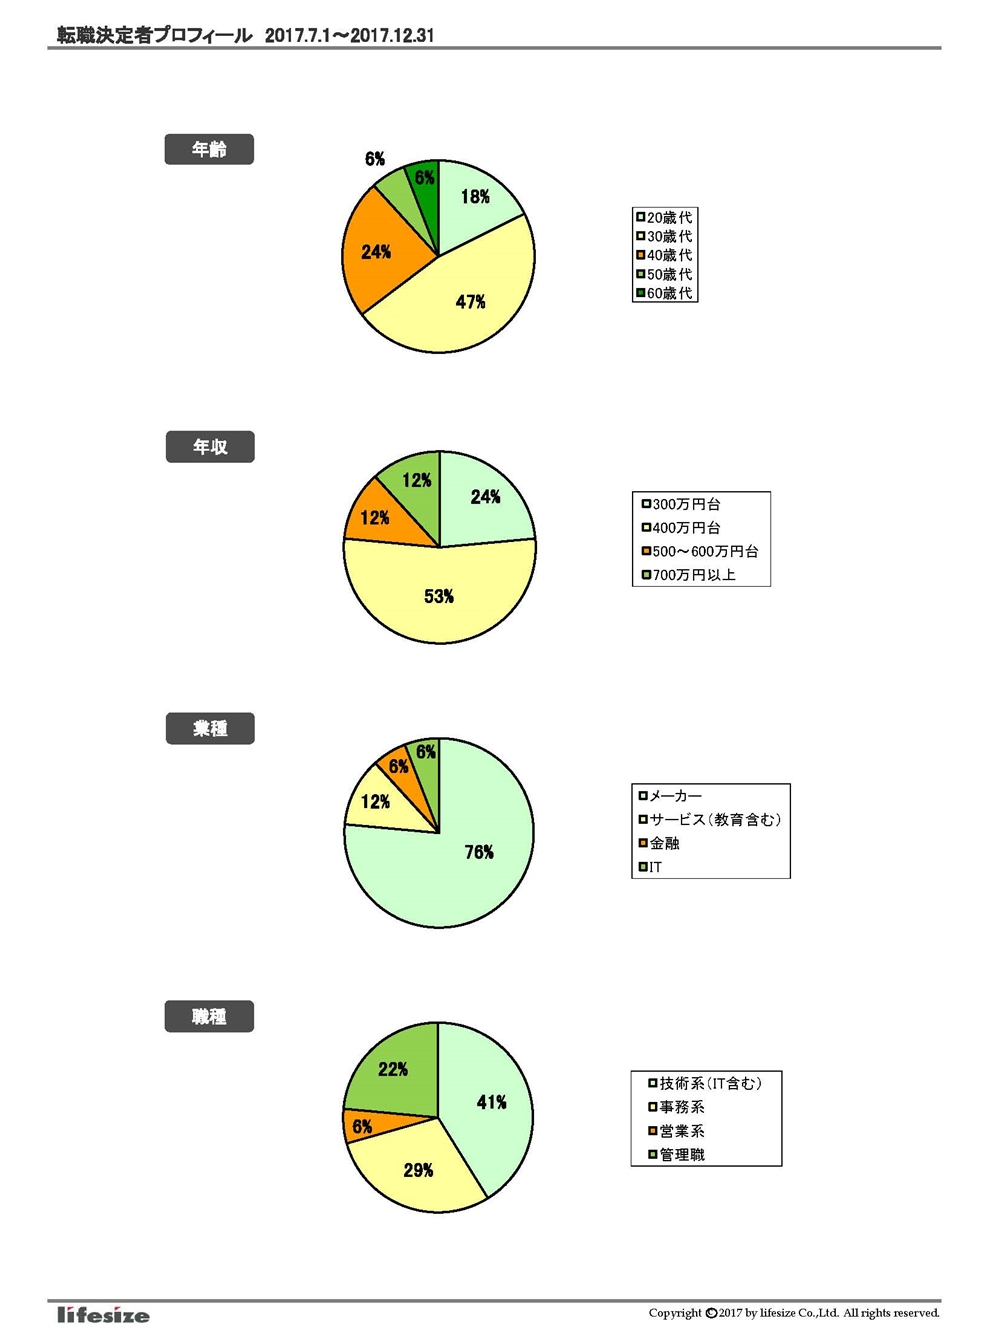 http://rs-fukuoka.net/%E8%BB%A2%E8%81%B7%E6%88%90%E5%8A%9F%E8%80%85%E3%83%97%E3%83%AD%E3%83%95%E3%82%A3%E3%83%BC%E3%83%AB%EF%BC%882017%E5%B9%B4%E4%B8%8B%E5%8D%8A%E6%9C%9F%E7%89%88%EF%BC%89.jpg